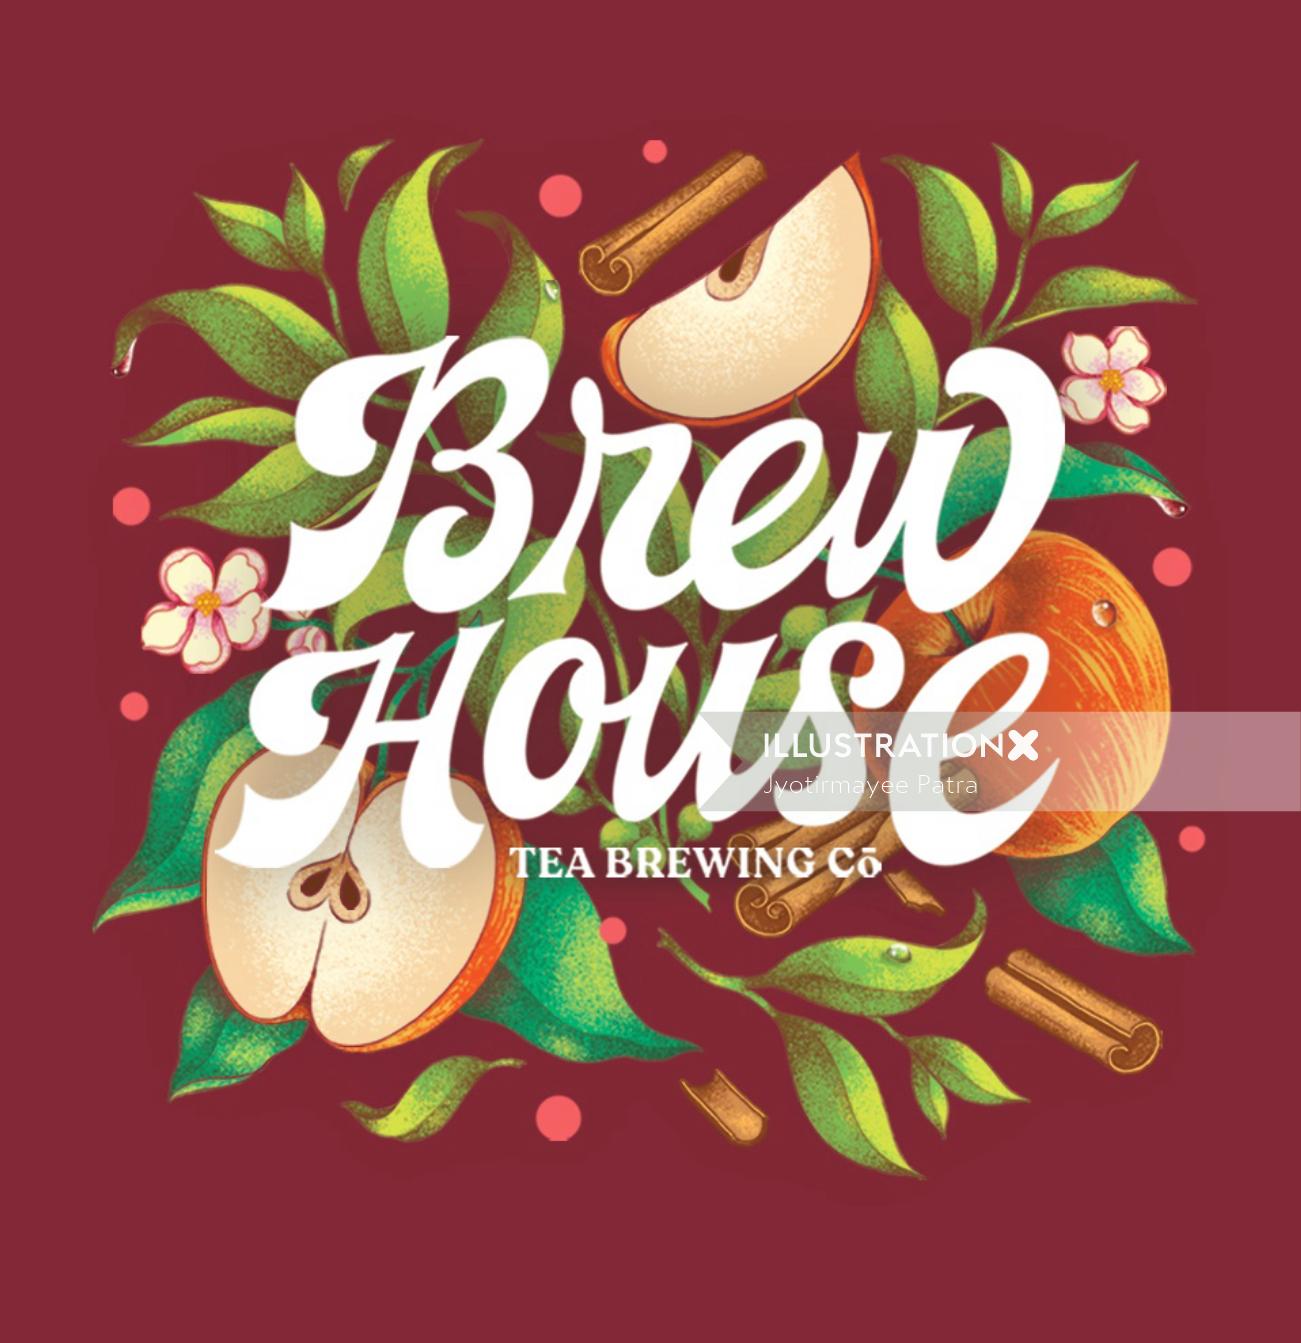 Brewhouse - Design de etiqueta